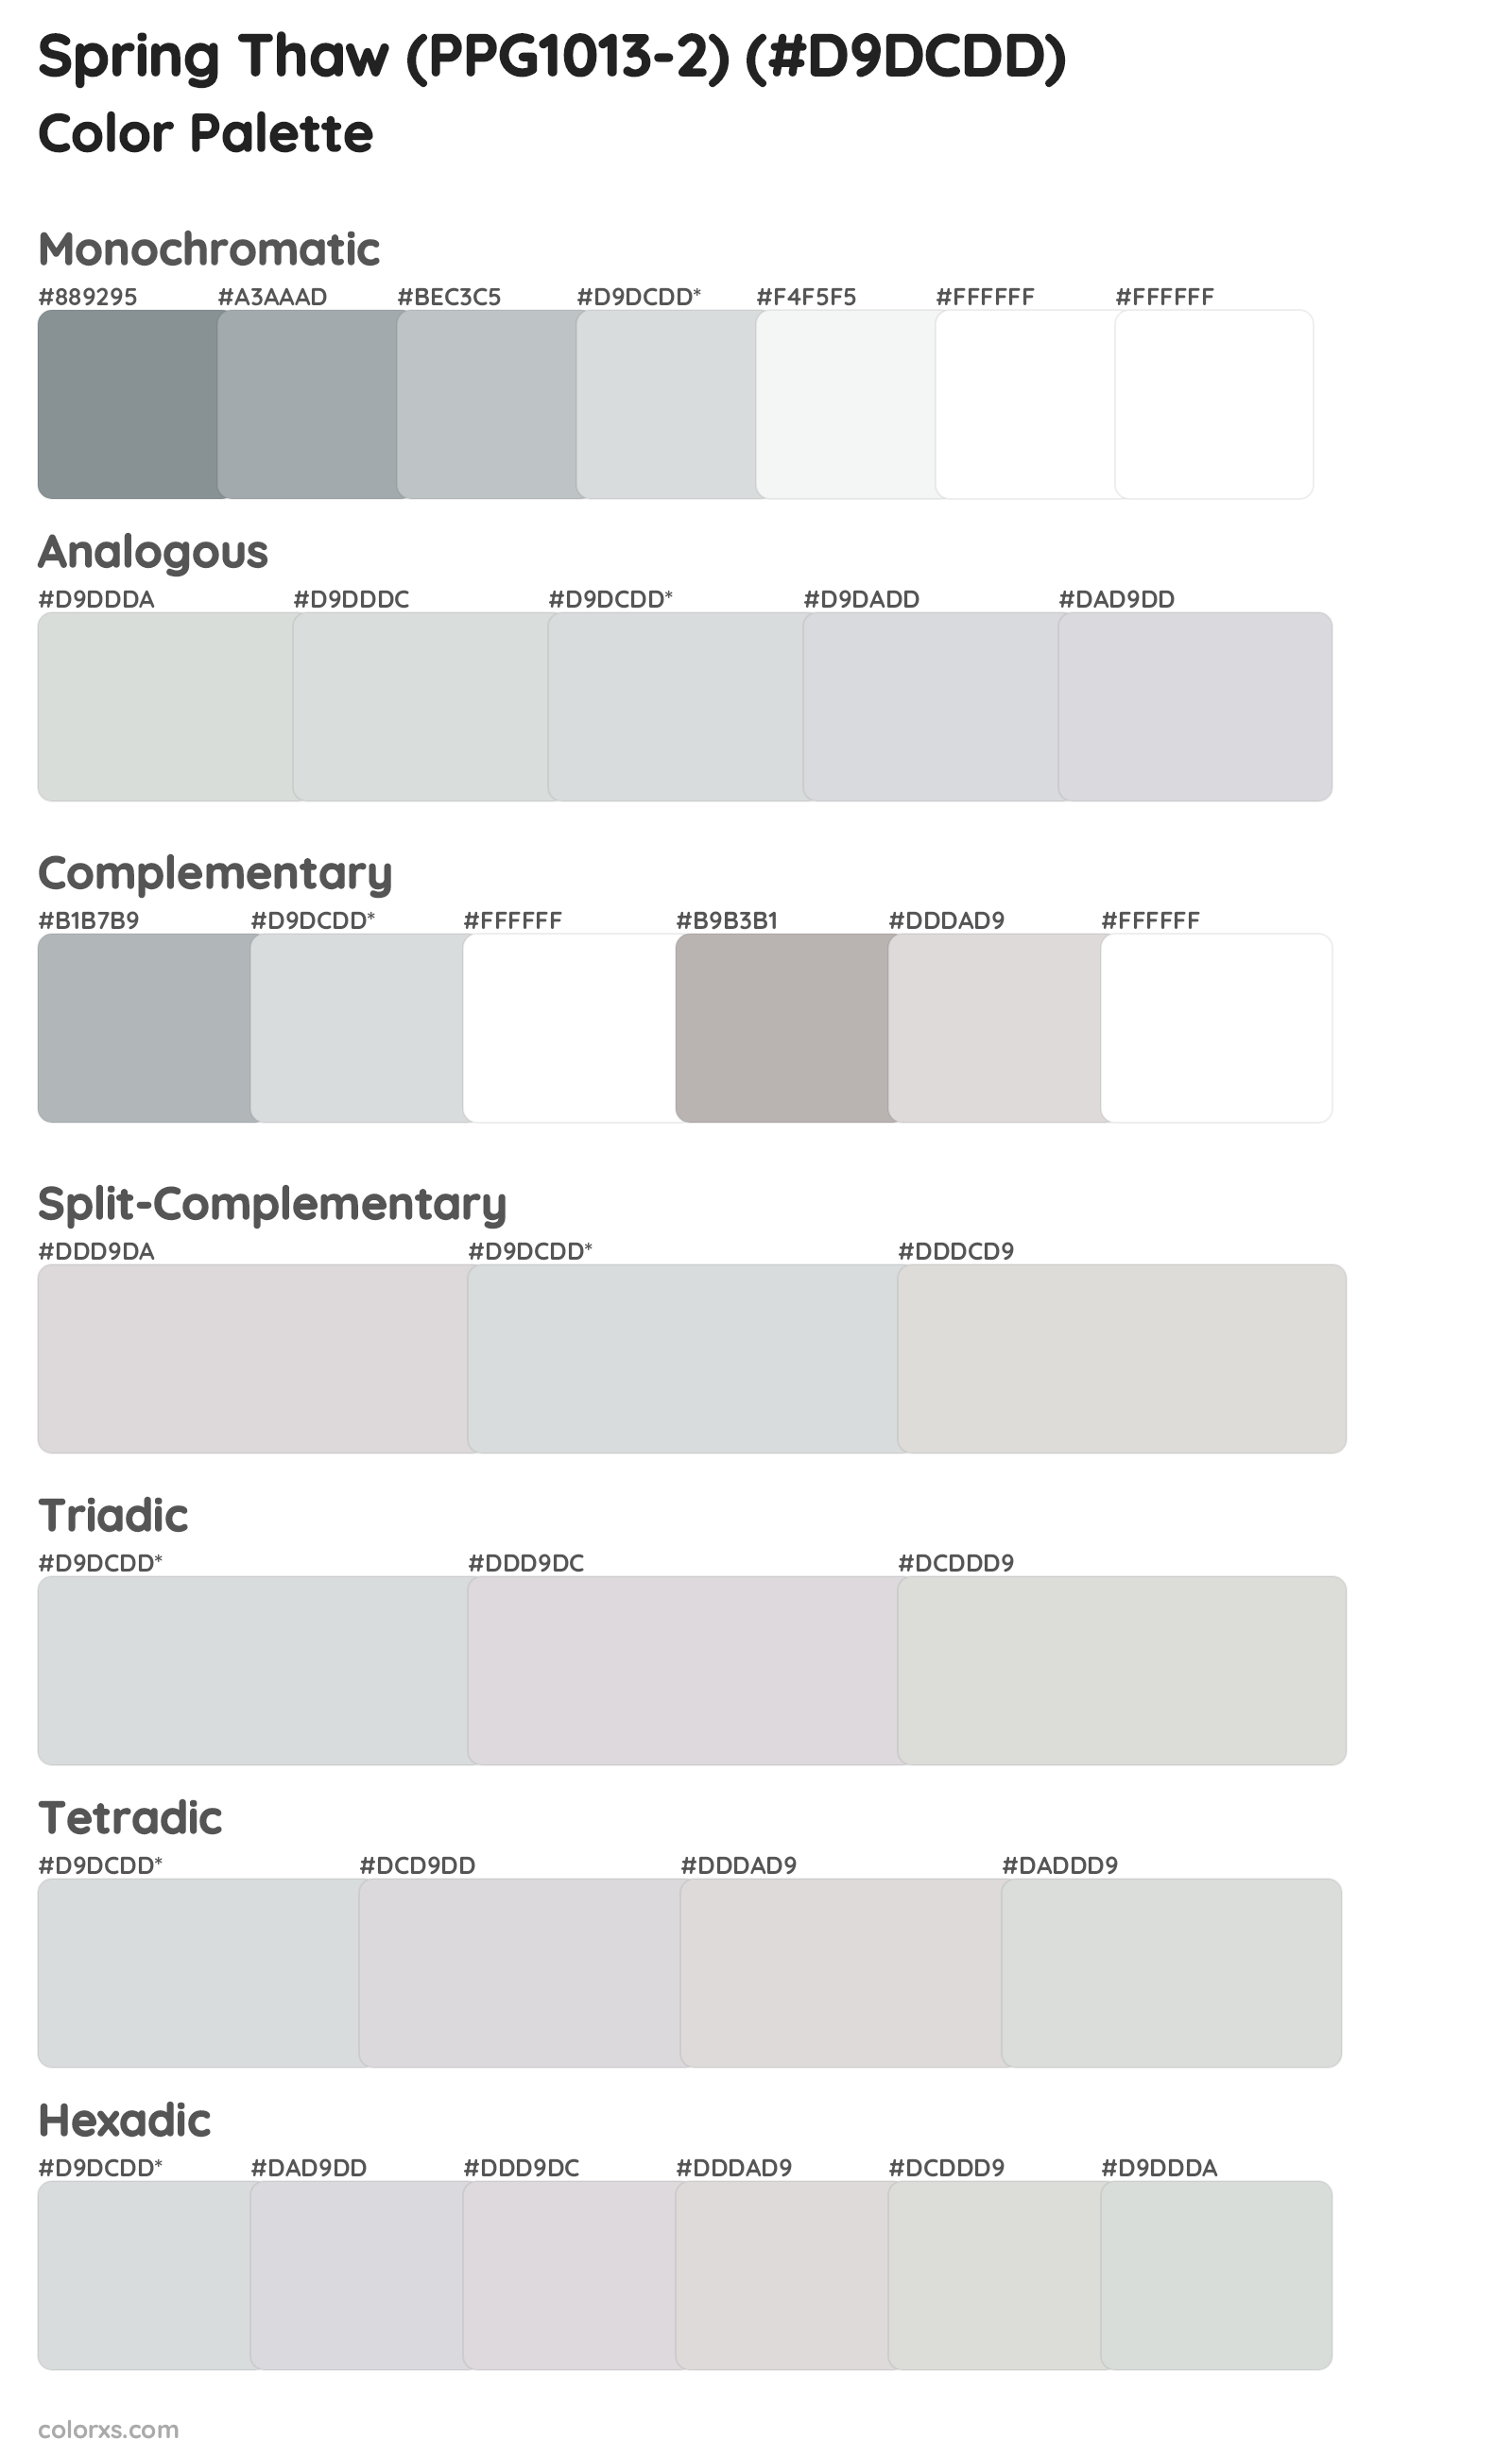 Spring Thaw (PPG1013-2) Color Scheme Palettes